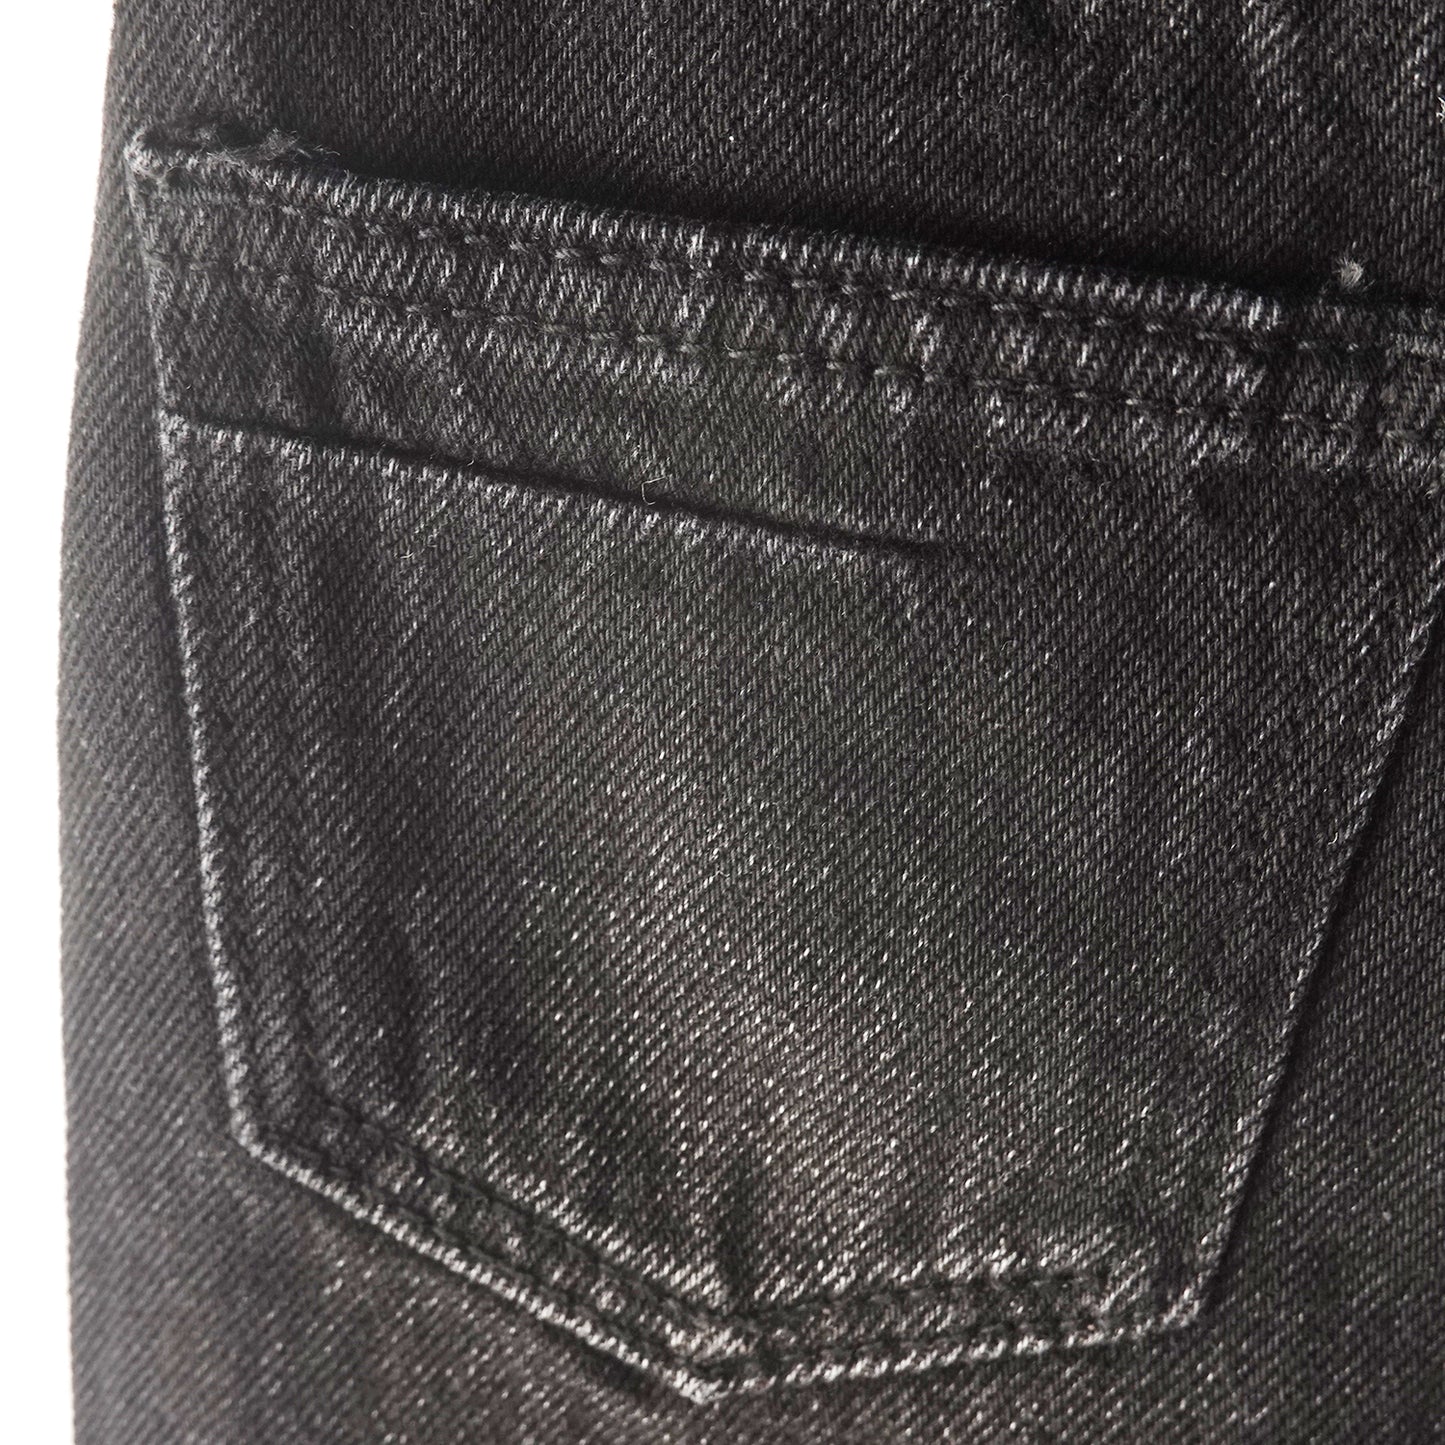 Baby Denim Shorts,Elastic WaistBand Inside Ripped Holes Summer Half Jeans